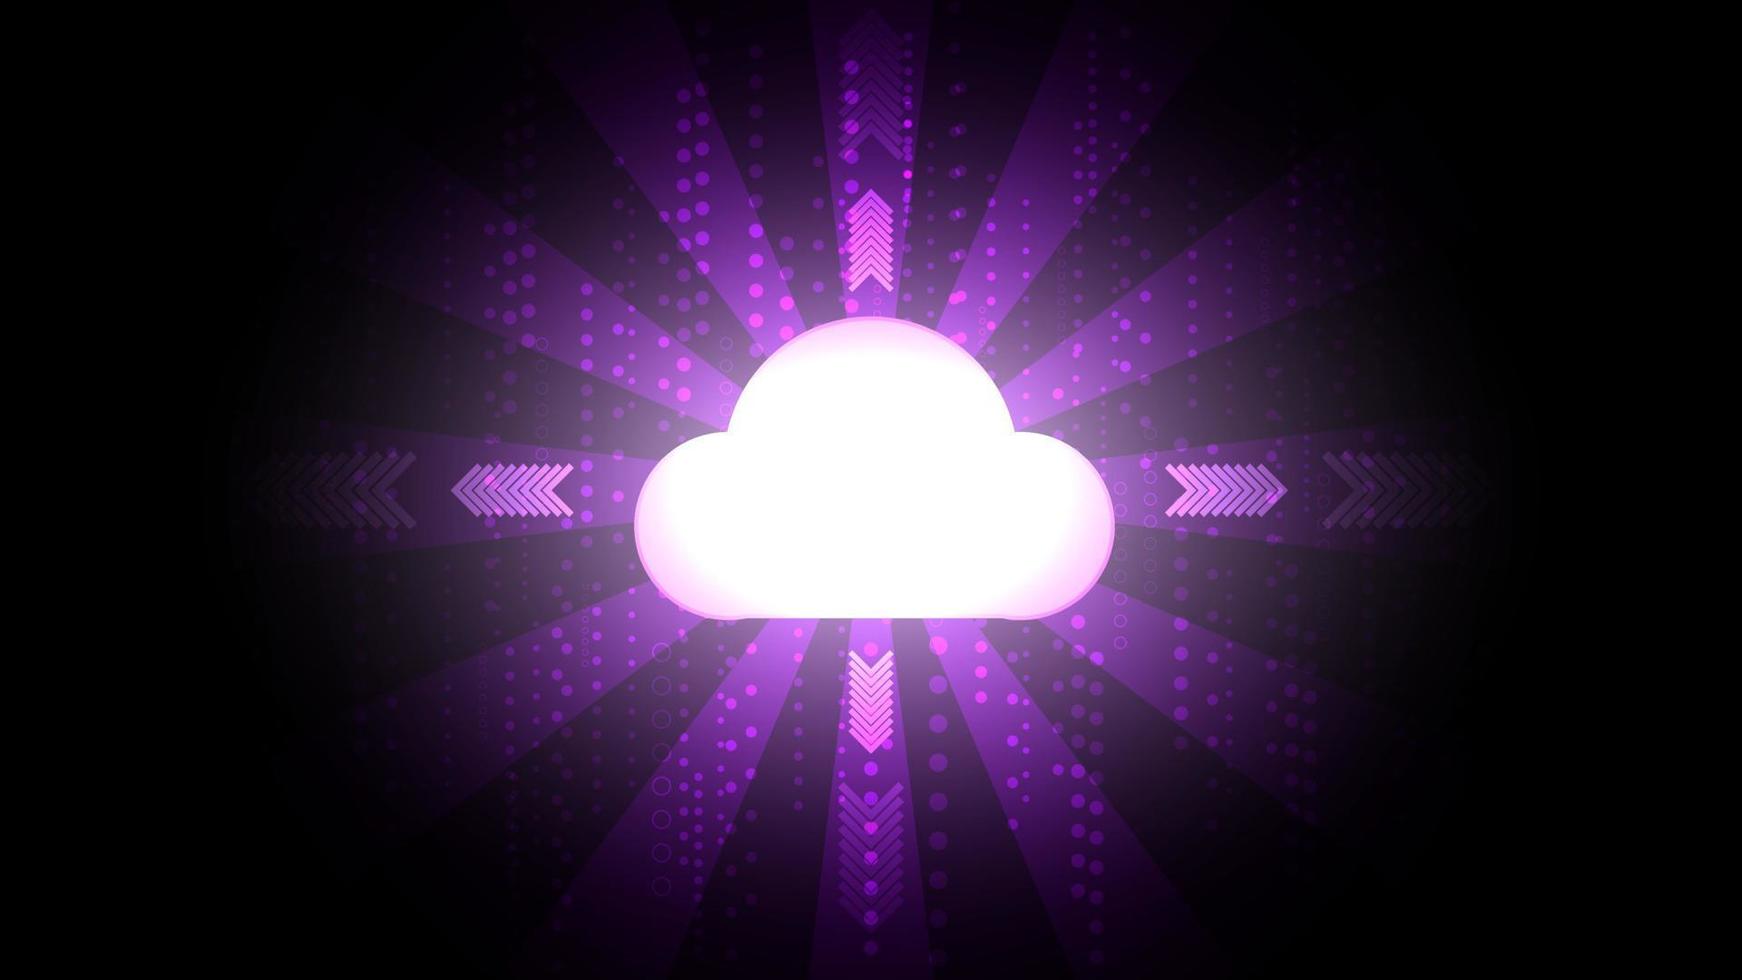 almacenamiento de datos de nube de tecnología abstracta, comunicación digital, datos de tecnología, ilustración de fondo púrpura de red en línea, perfecto para telón de fondo, papel tapiz, fondo, banner vector